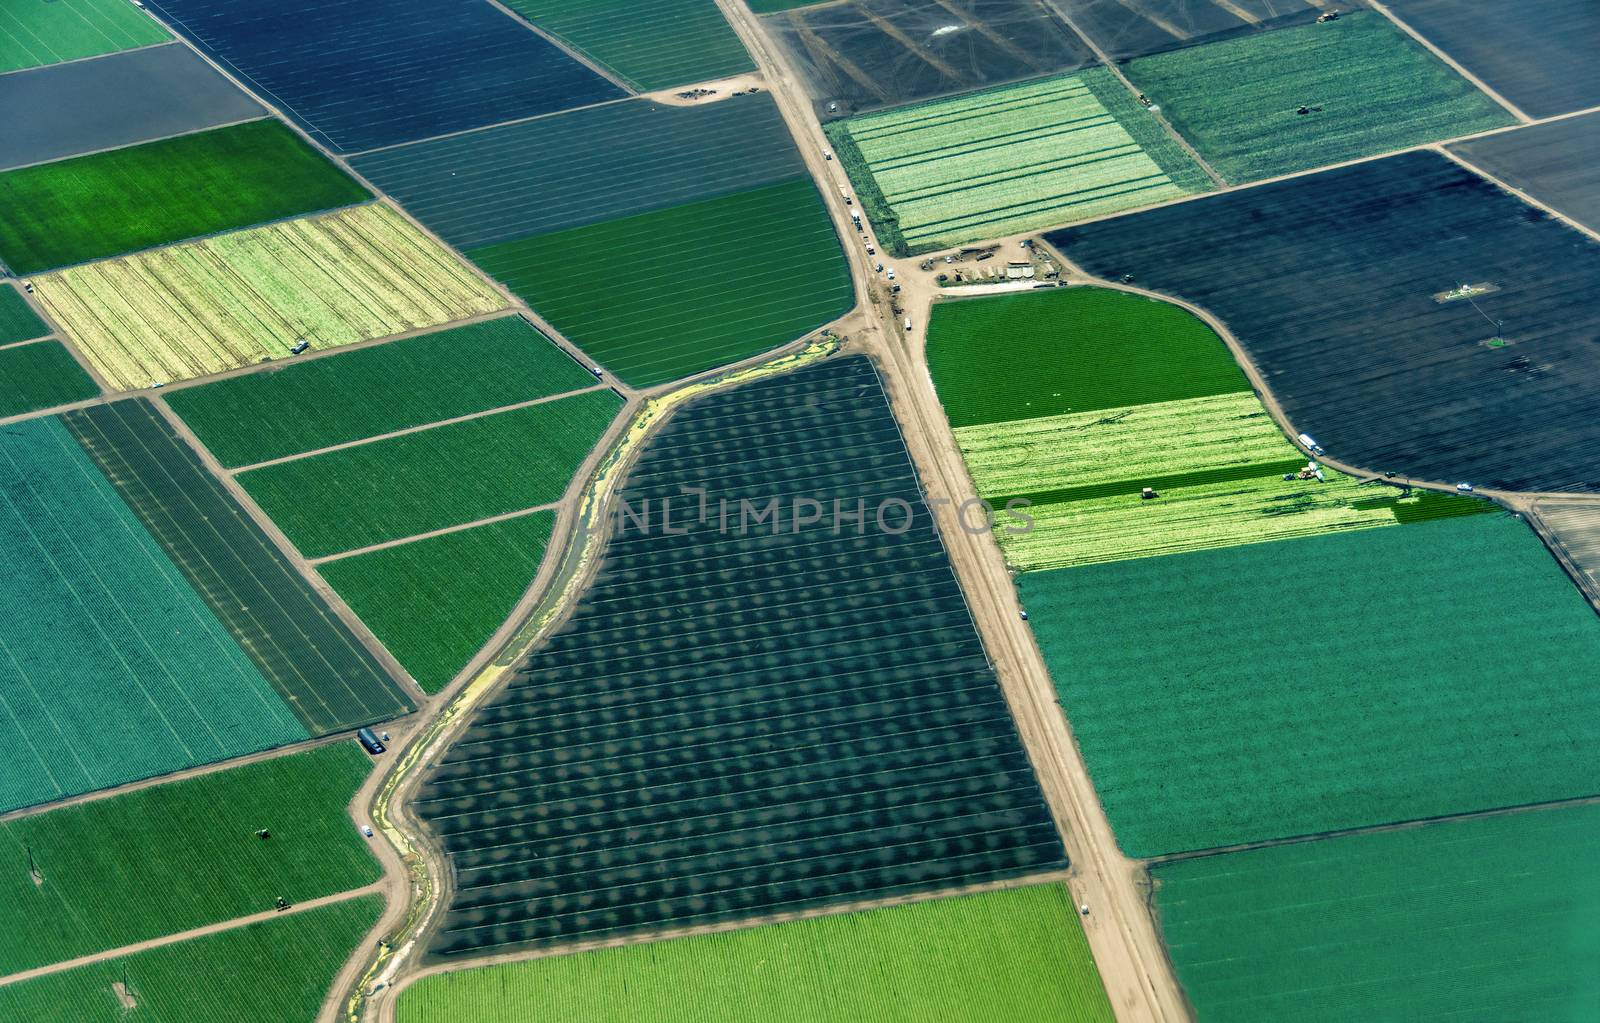 Farmland in Northern California by whitechild